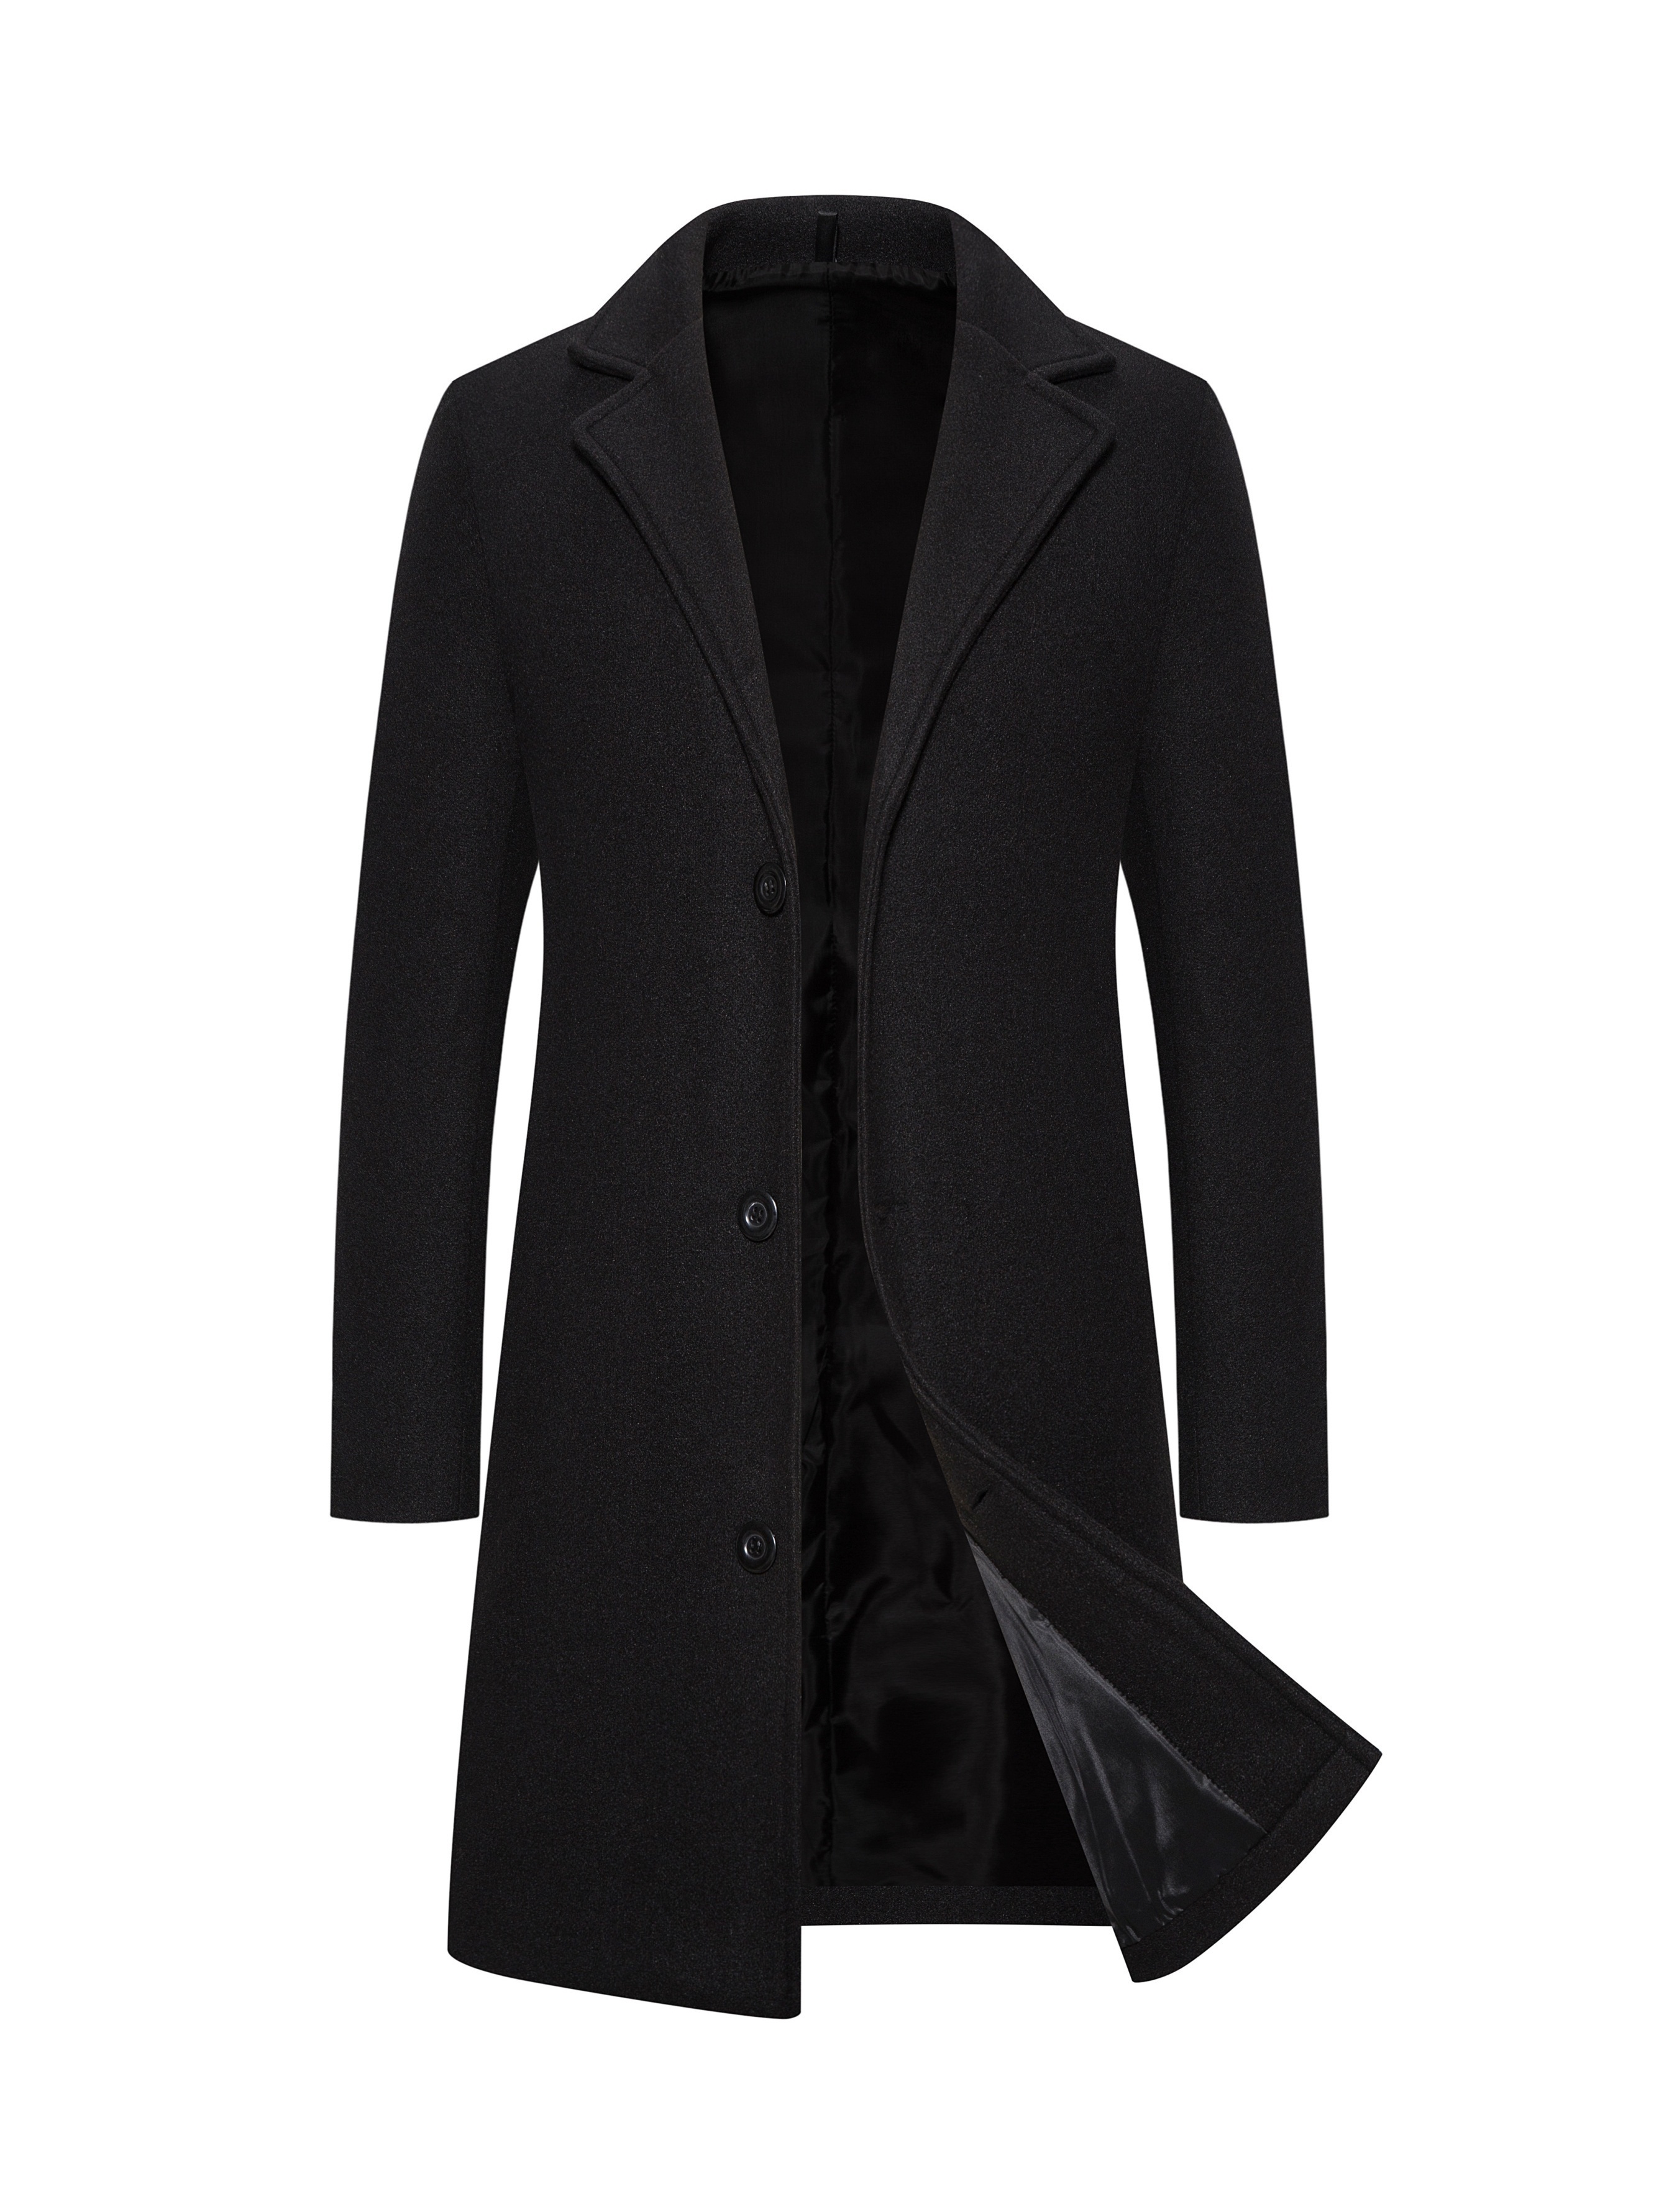 Men Premium Long Black Overcoat  Double Breasted Black Wool Coat